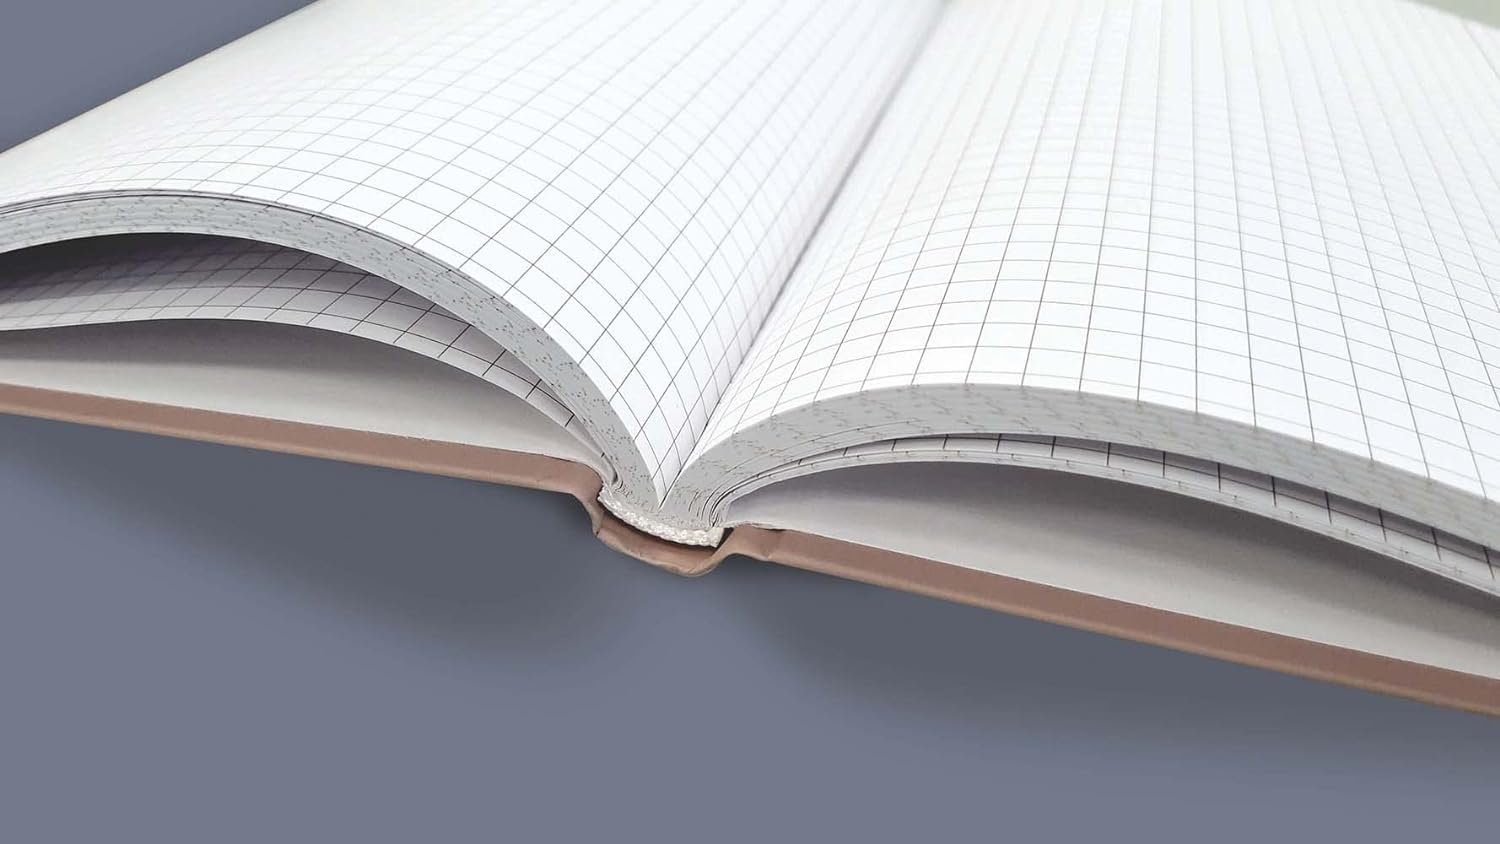 A5 Notizbuch kariert Premium-Hardcover-Notizbuch Interdruk Blatt 90g/m² 96